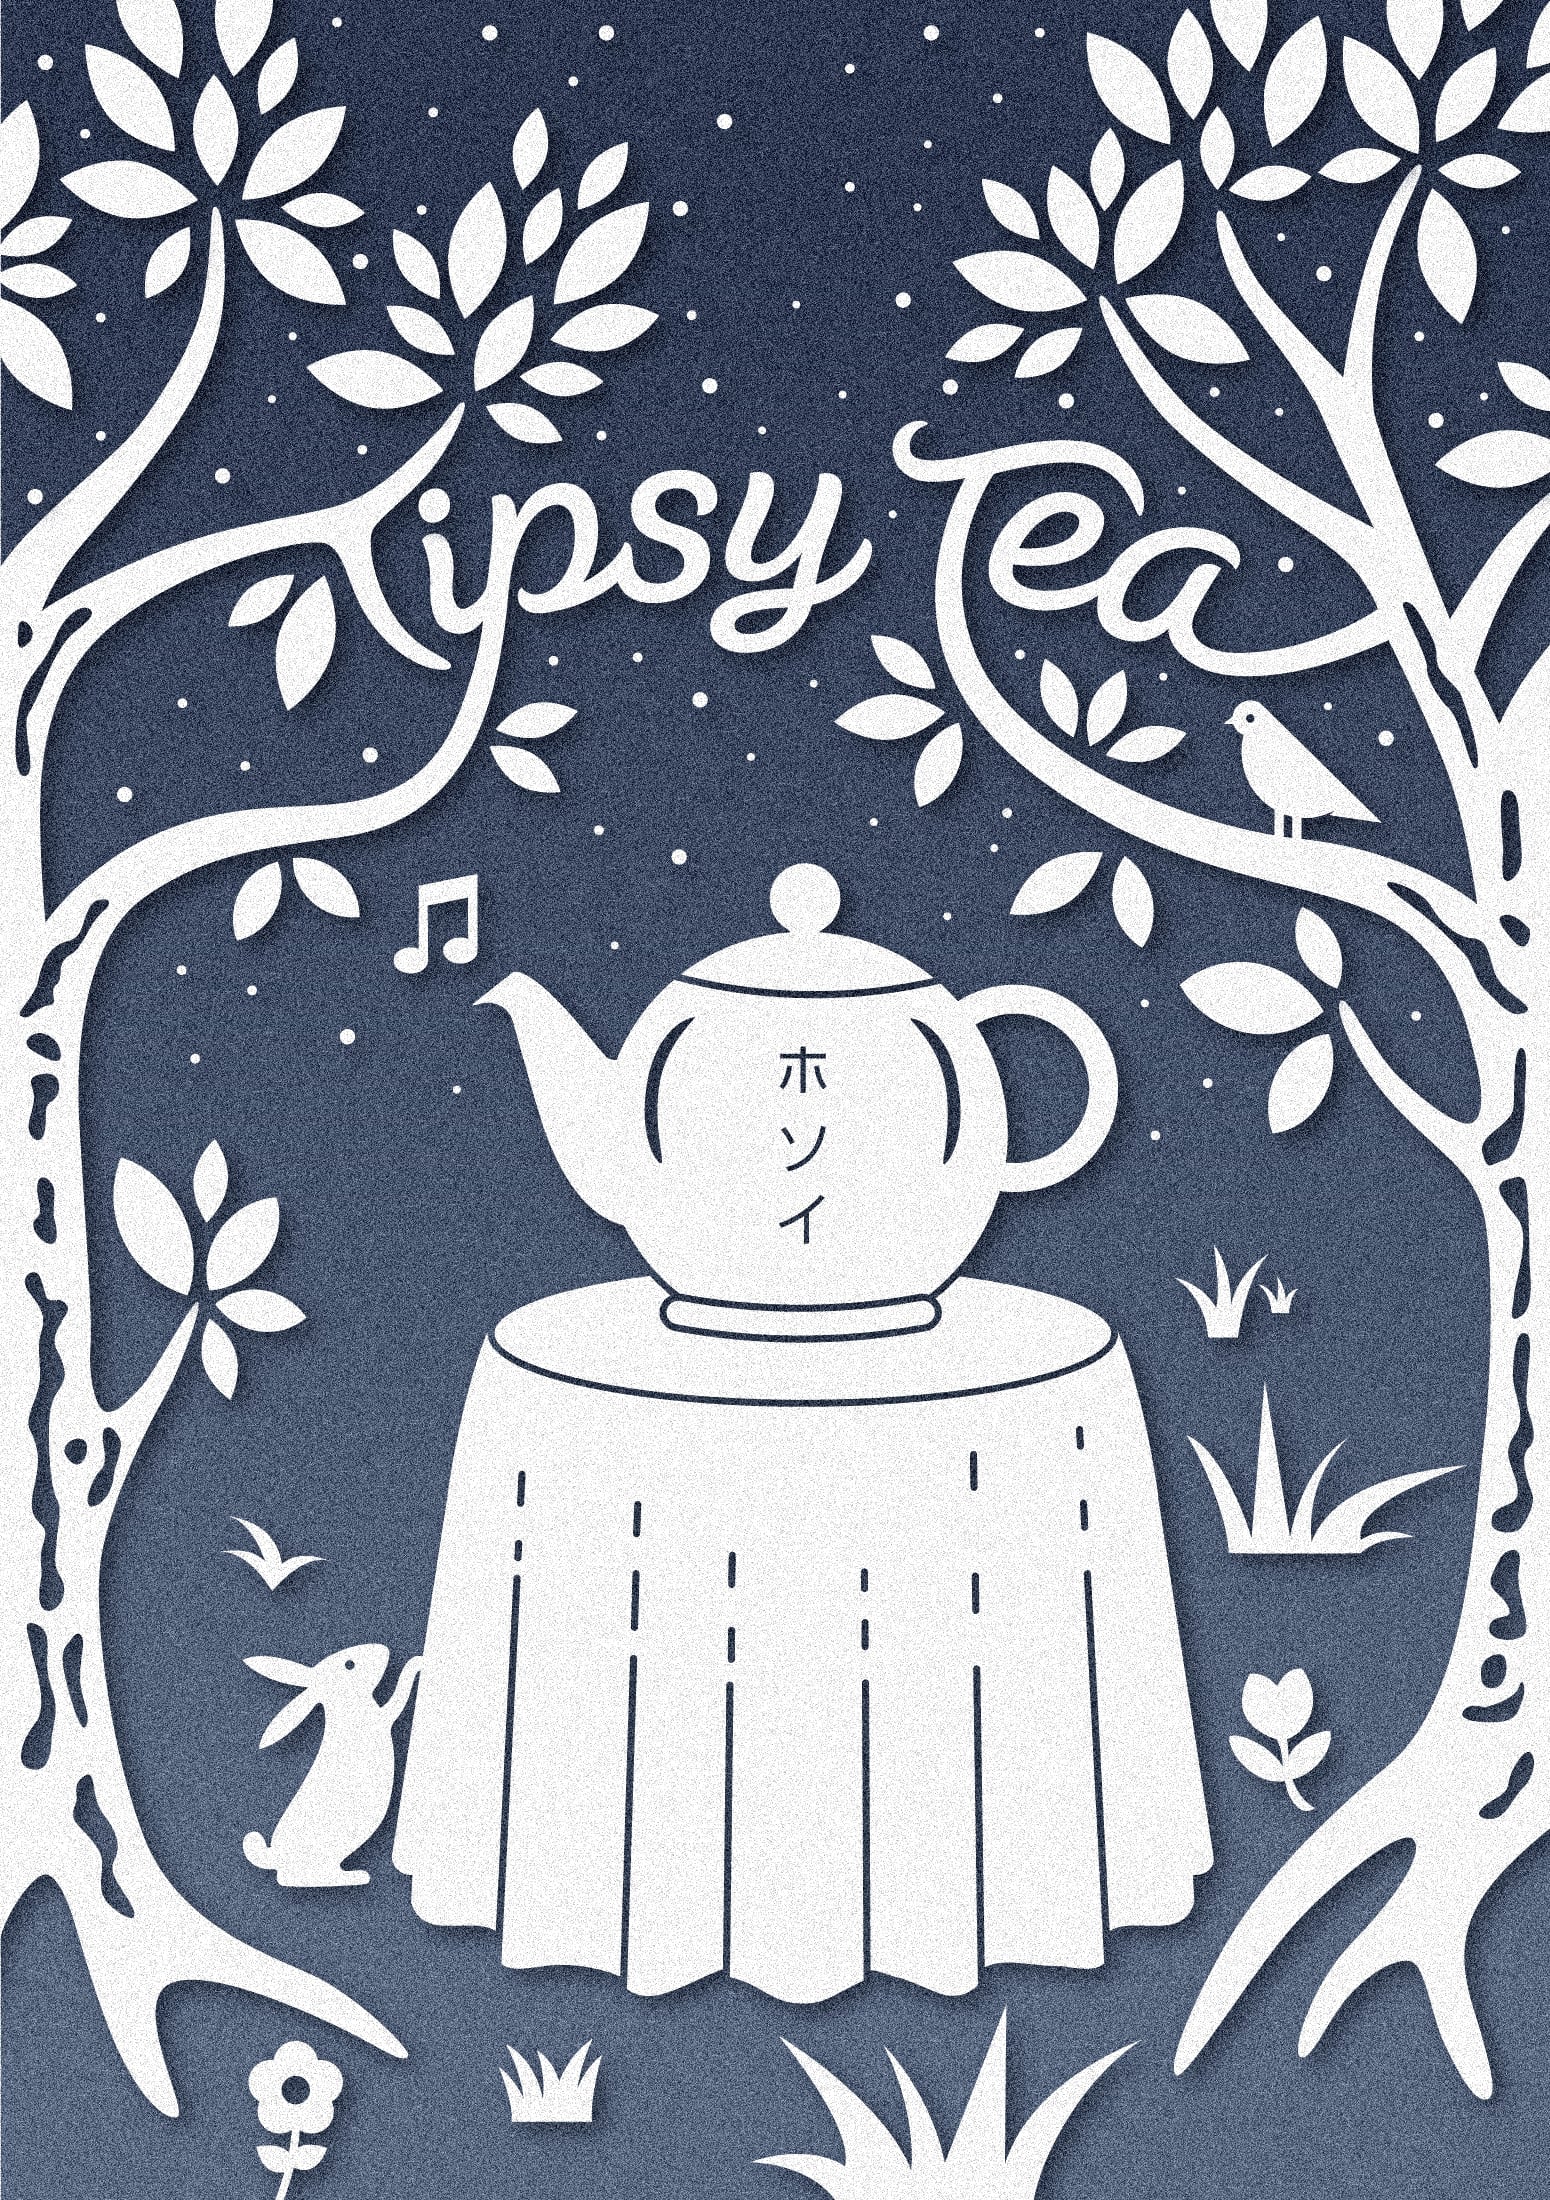 Behind the Amusement Park — Hosoi Tipsy Tea